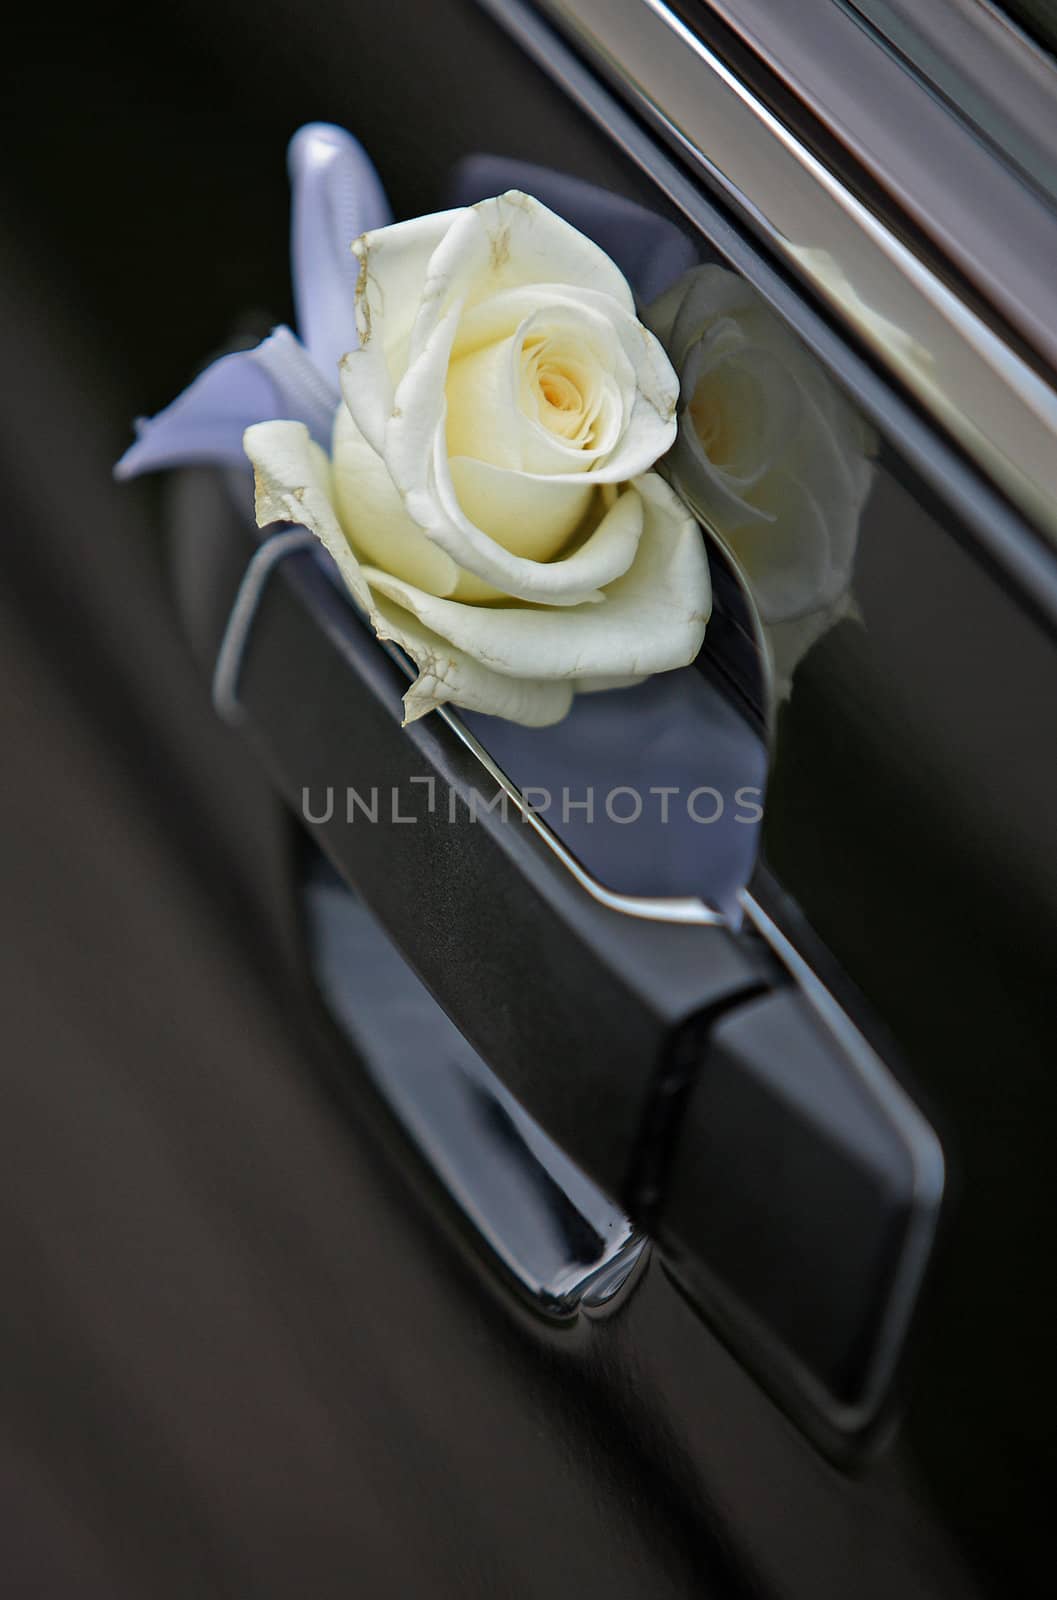 White rose behind a car door handle